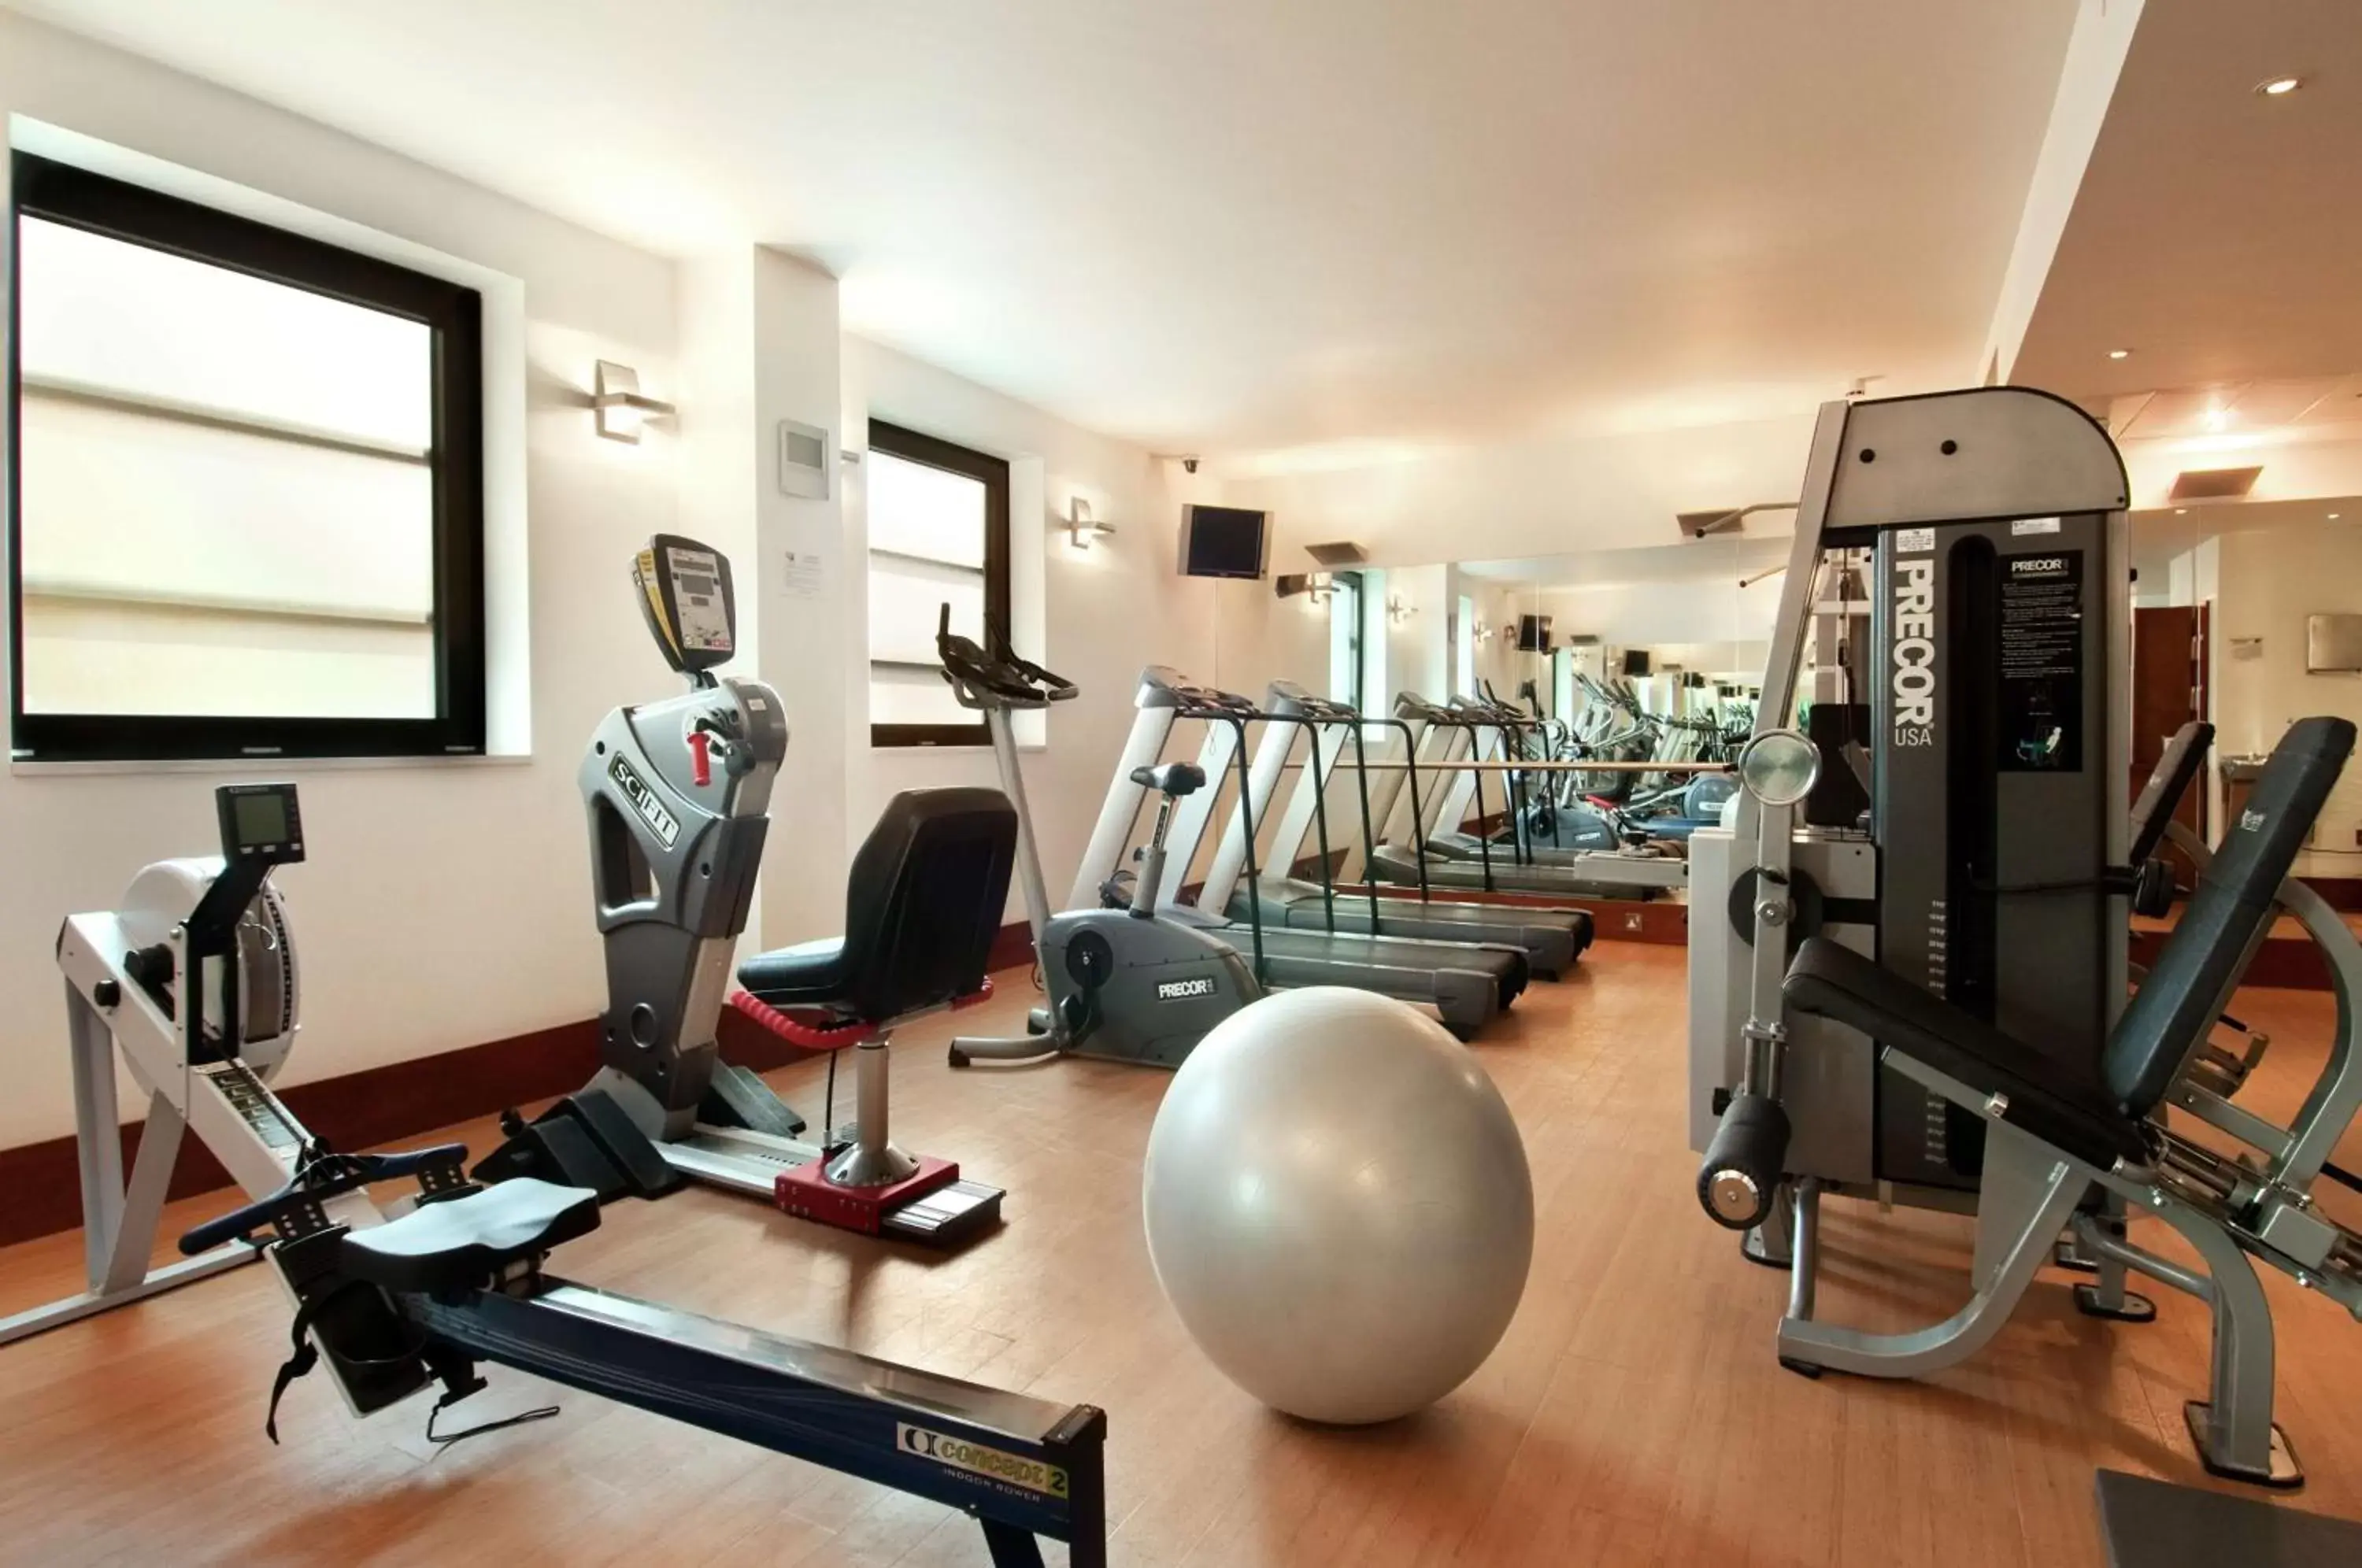 Fitness centre/facilities, Fitness Center/Facilities in Hilton London Tower Bridge